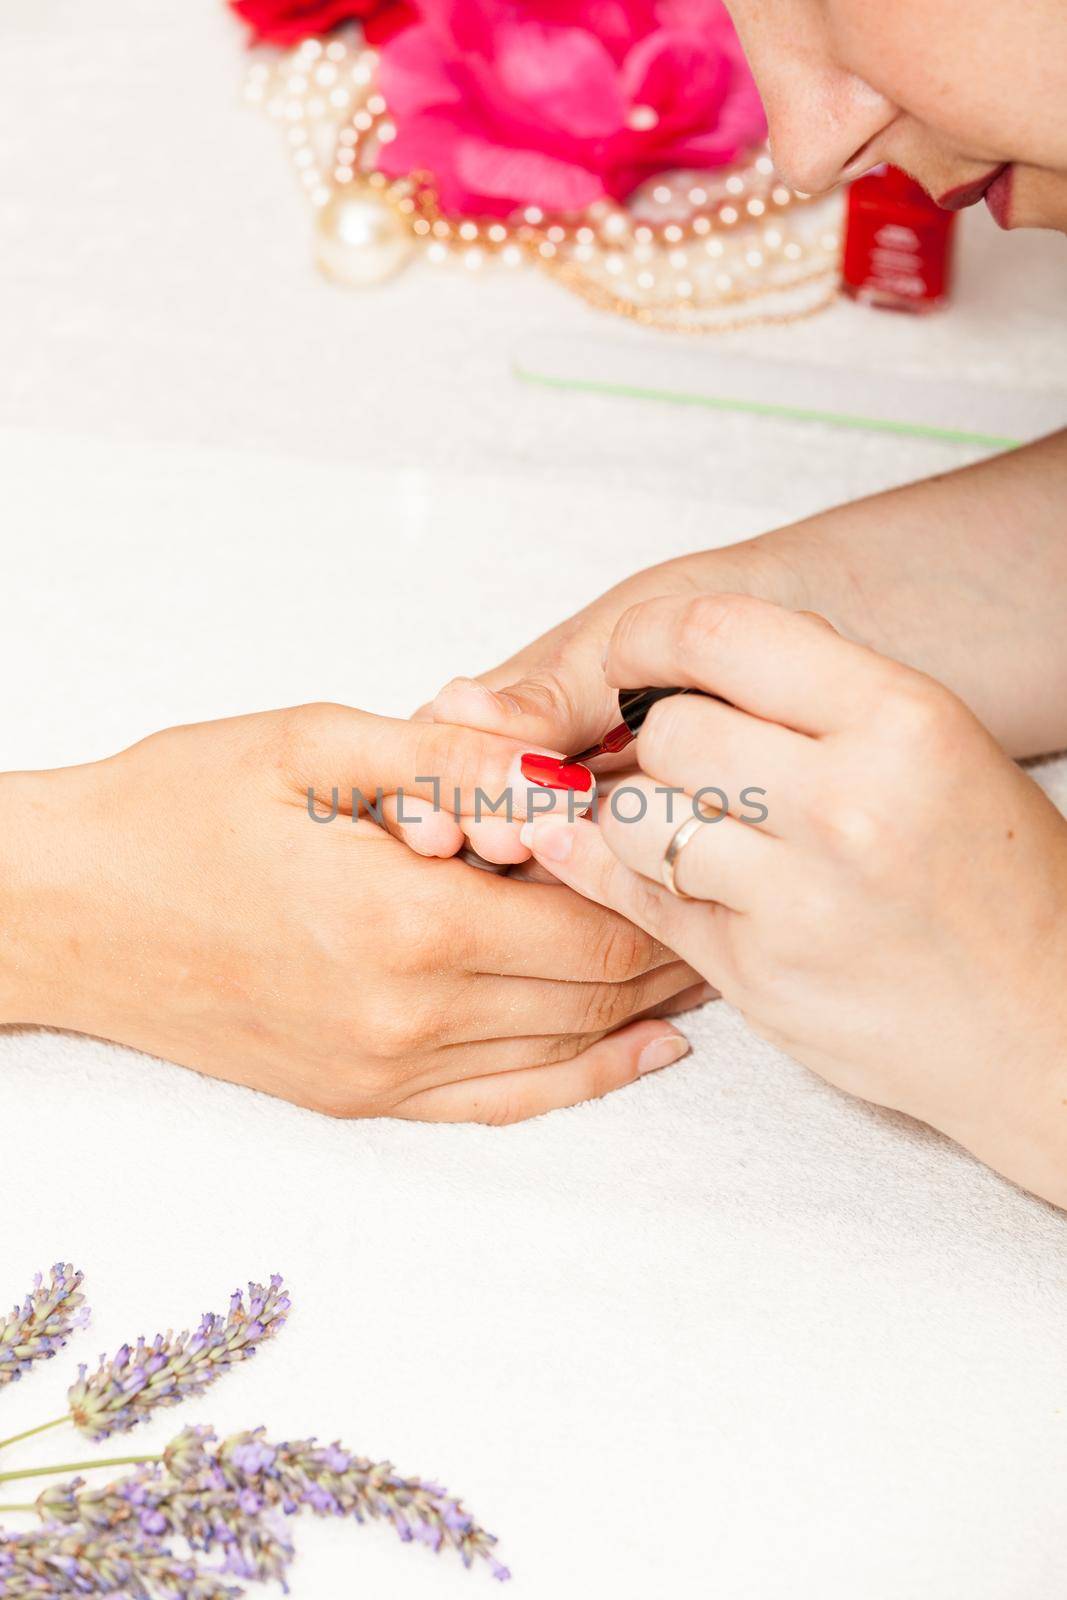 Applying nail polish on a woman's hands